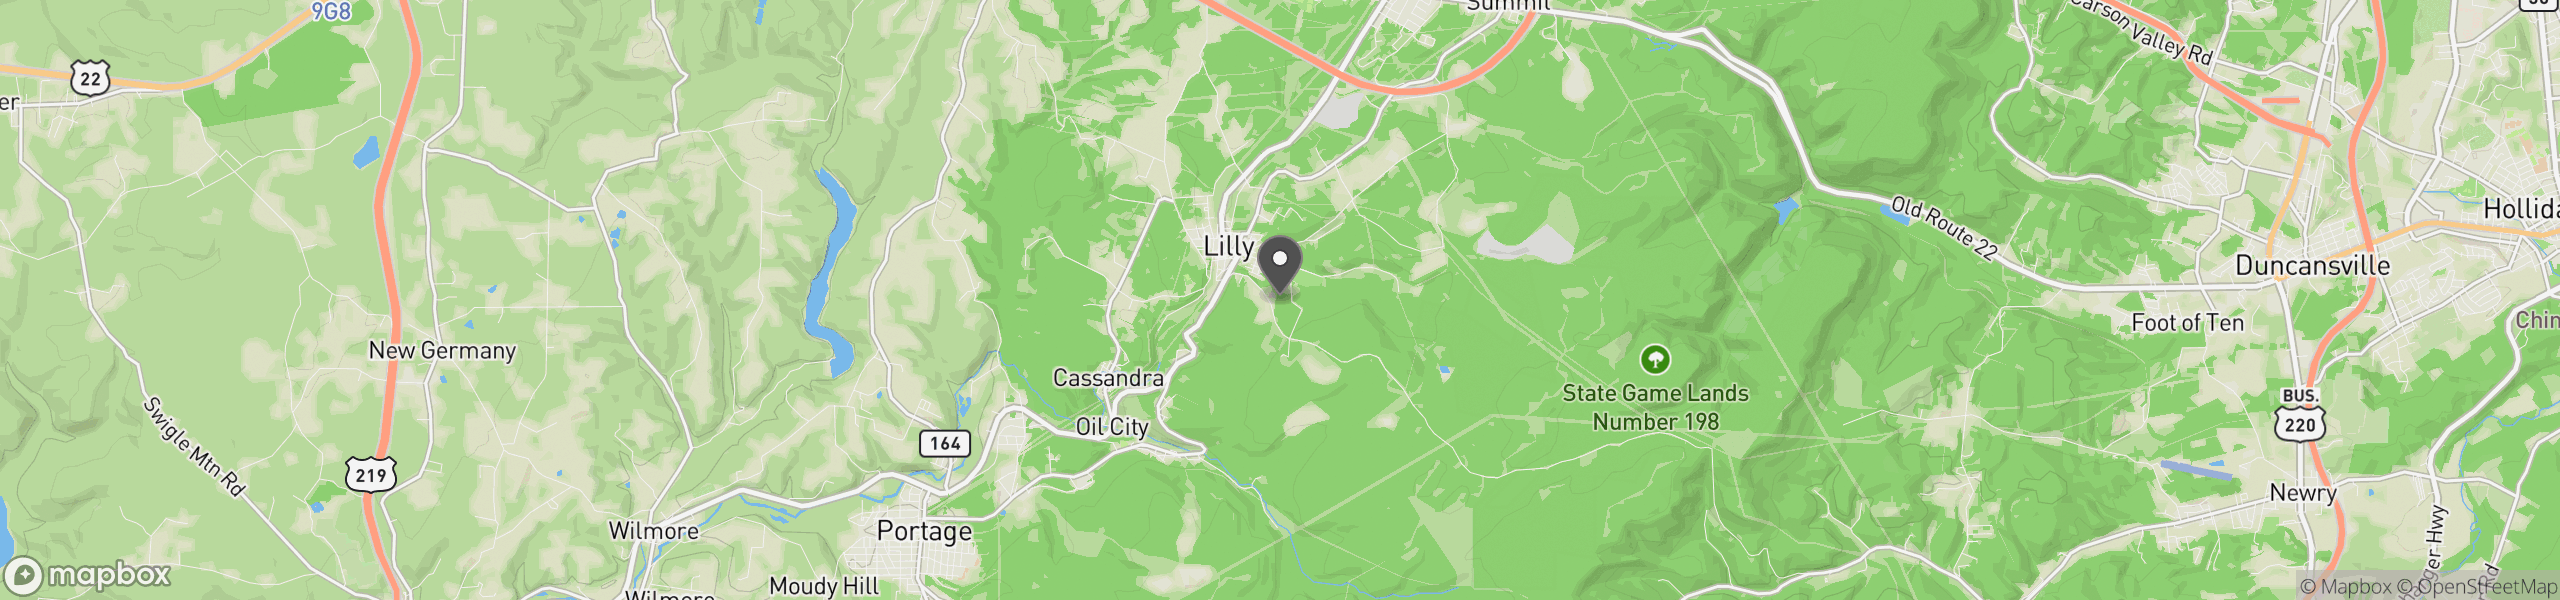 Lilly, PA 15938